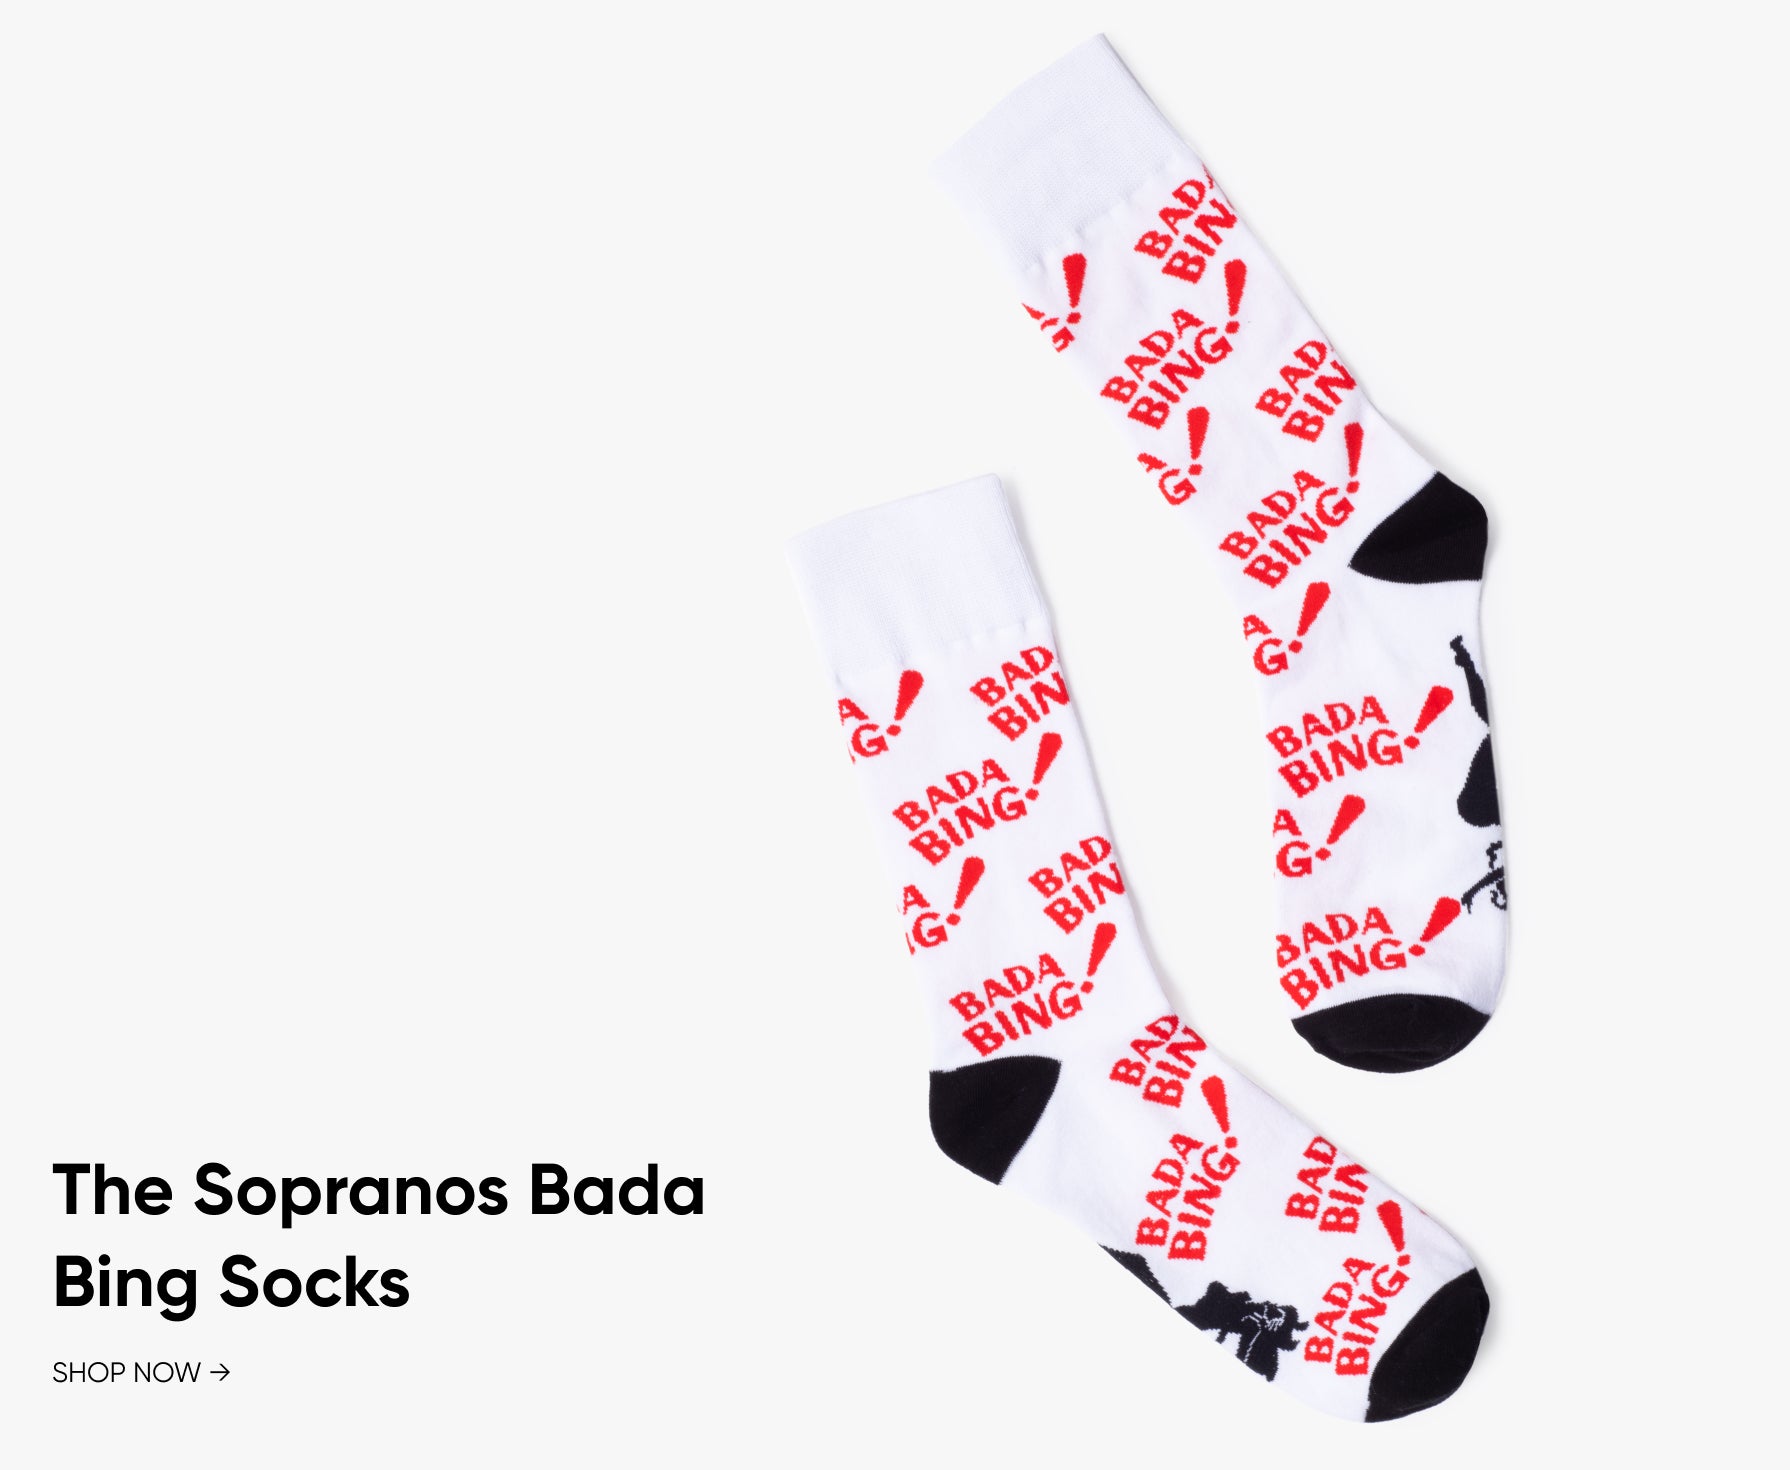 The Sopranos Bada Bing Socks